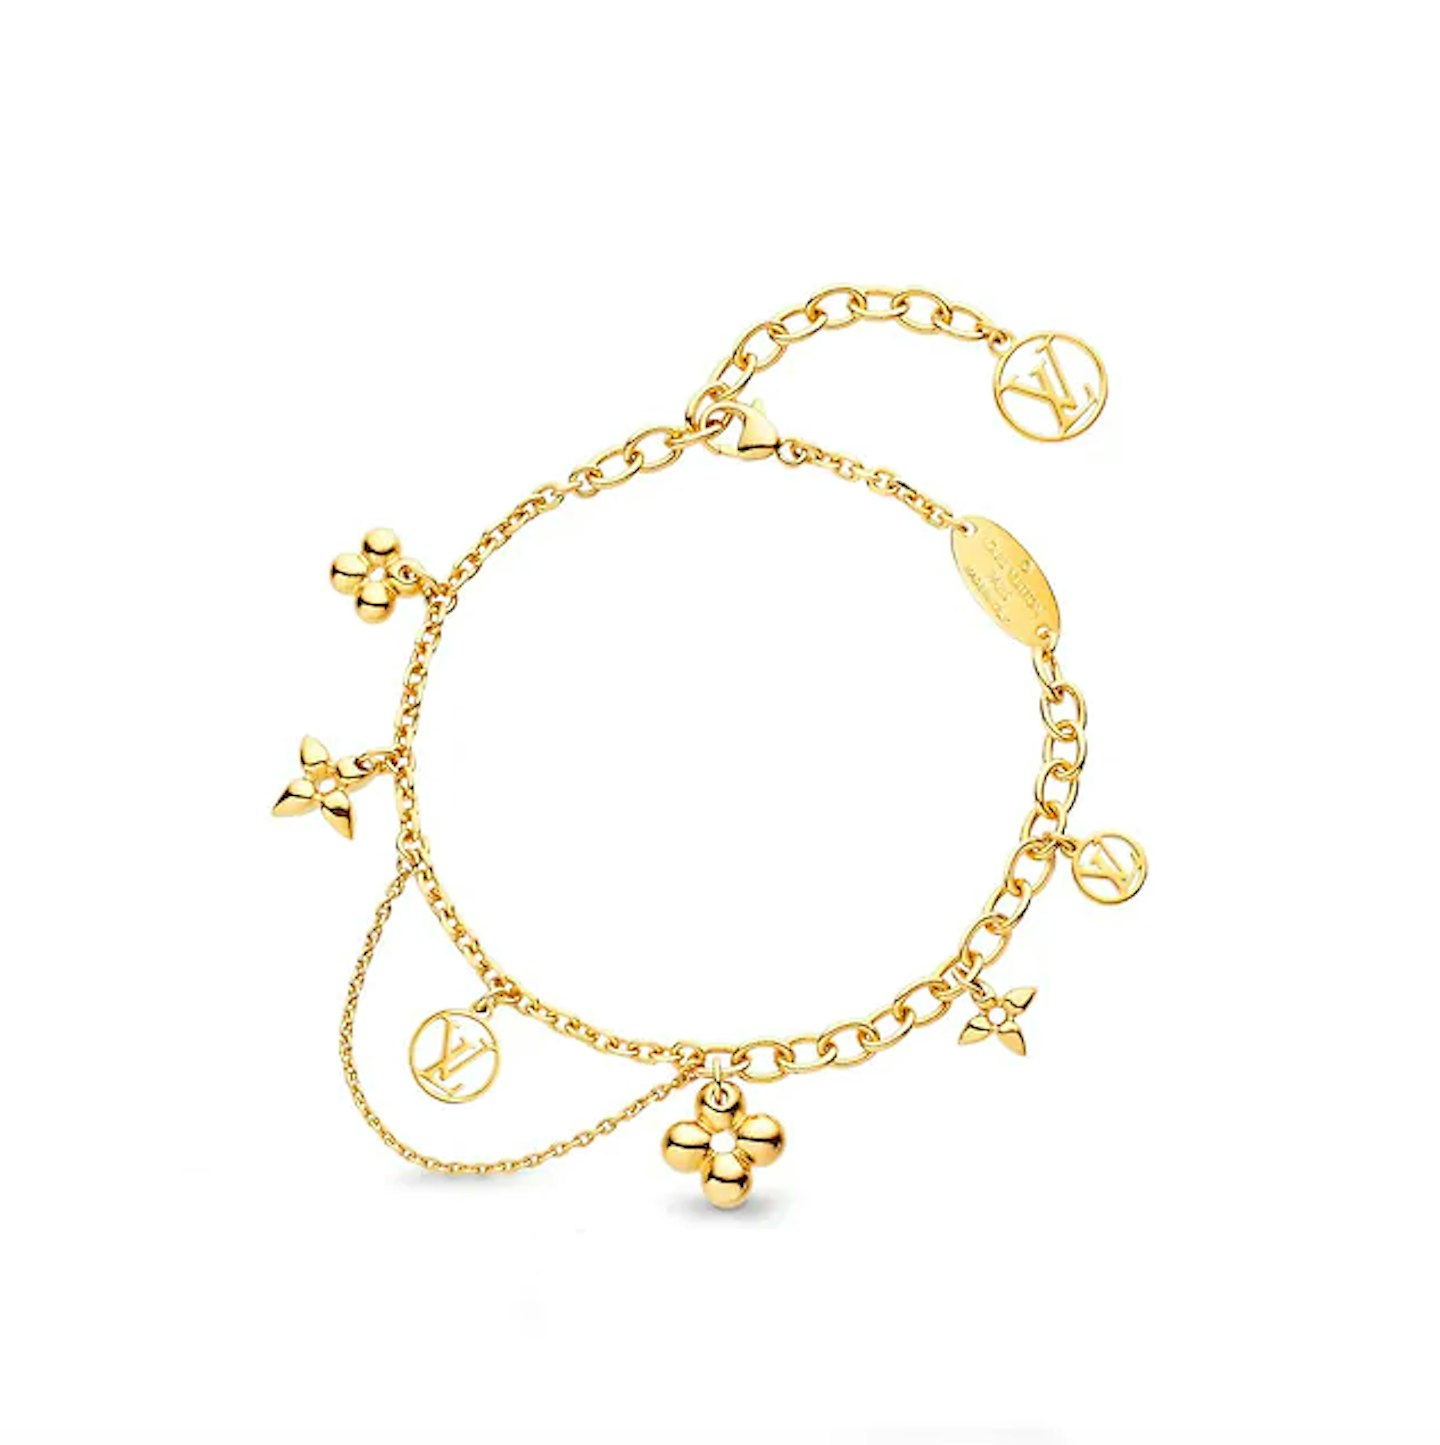 Louis Vuitton, Blooming Supple Bracelet, £335